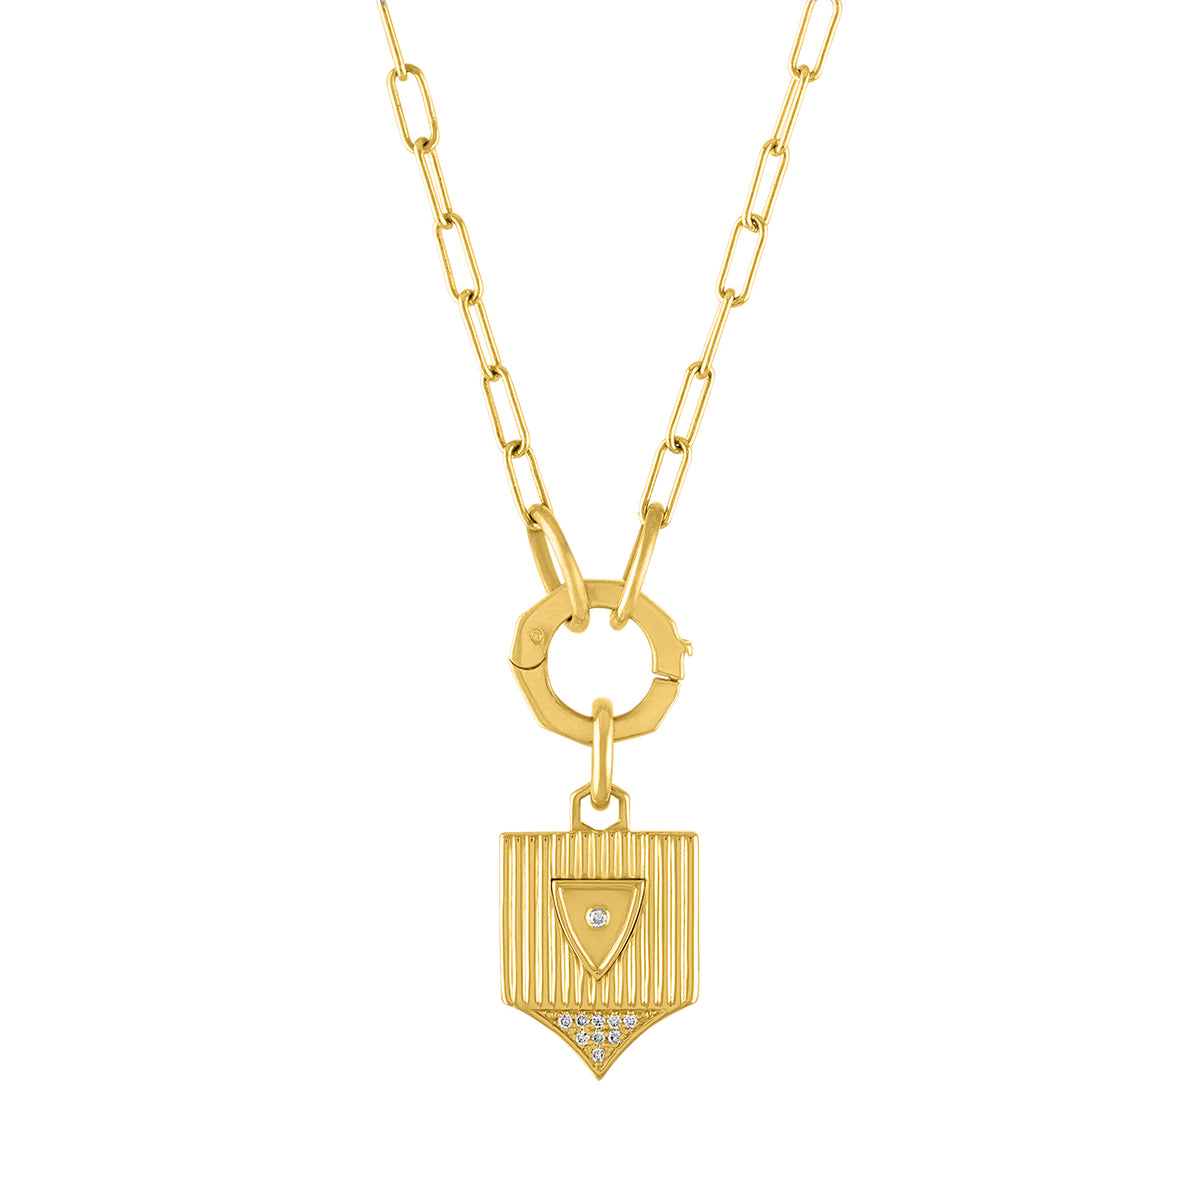 CHARM HOLDER, Charm Necklace, Necklace Pendant, Gold … - Gem